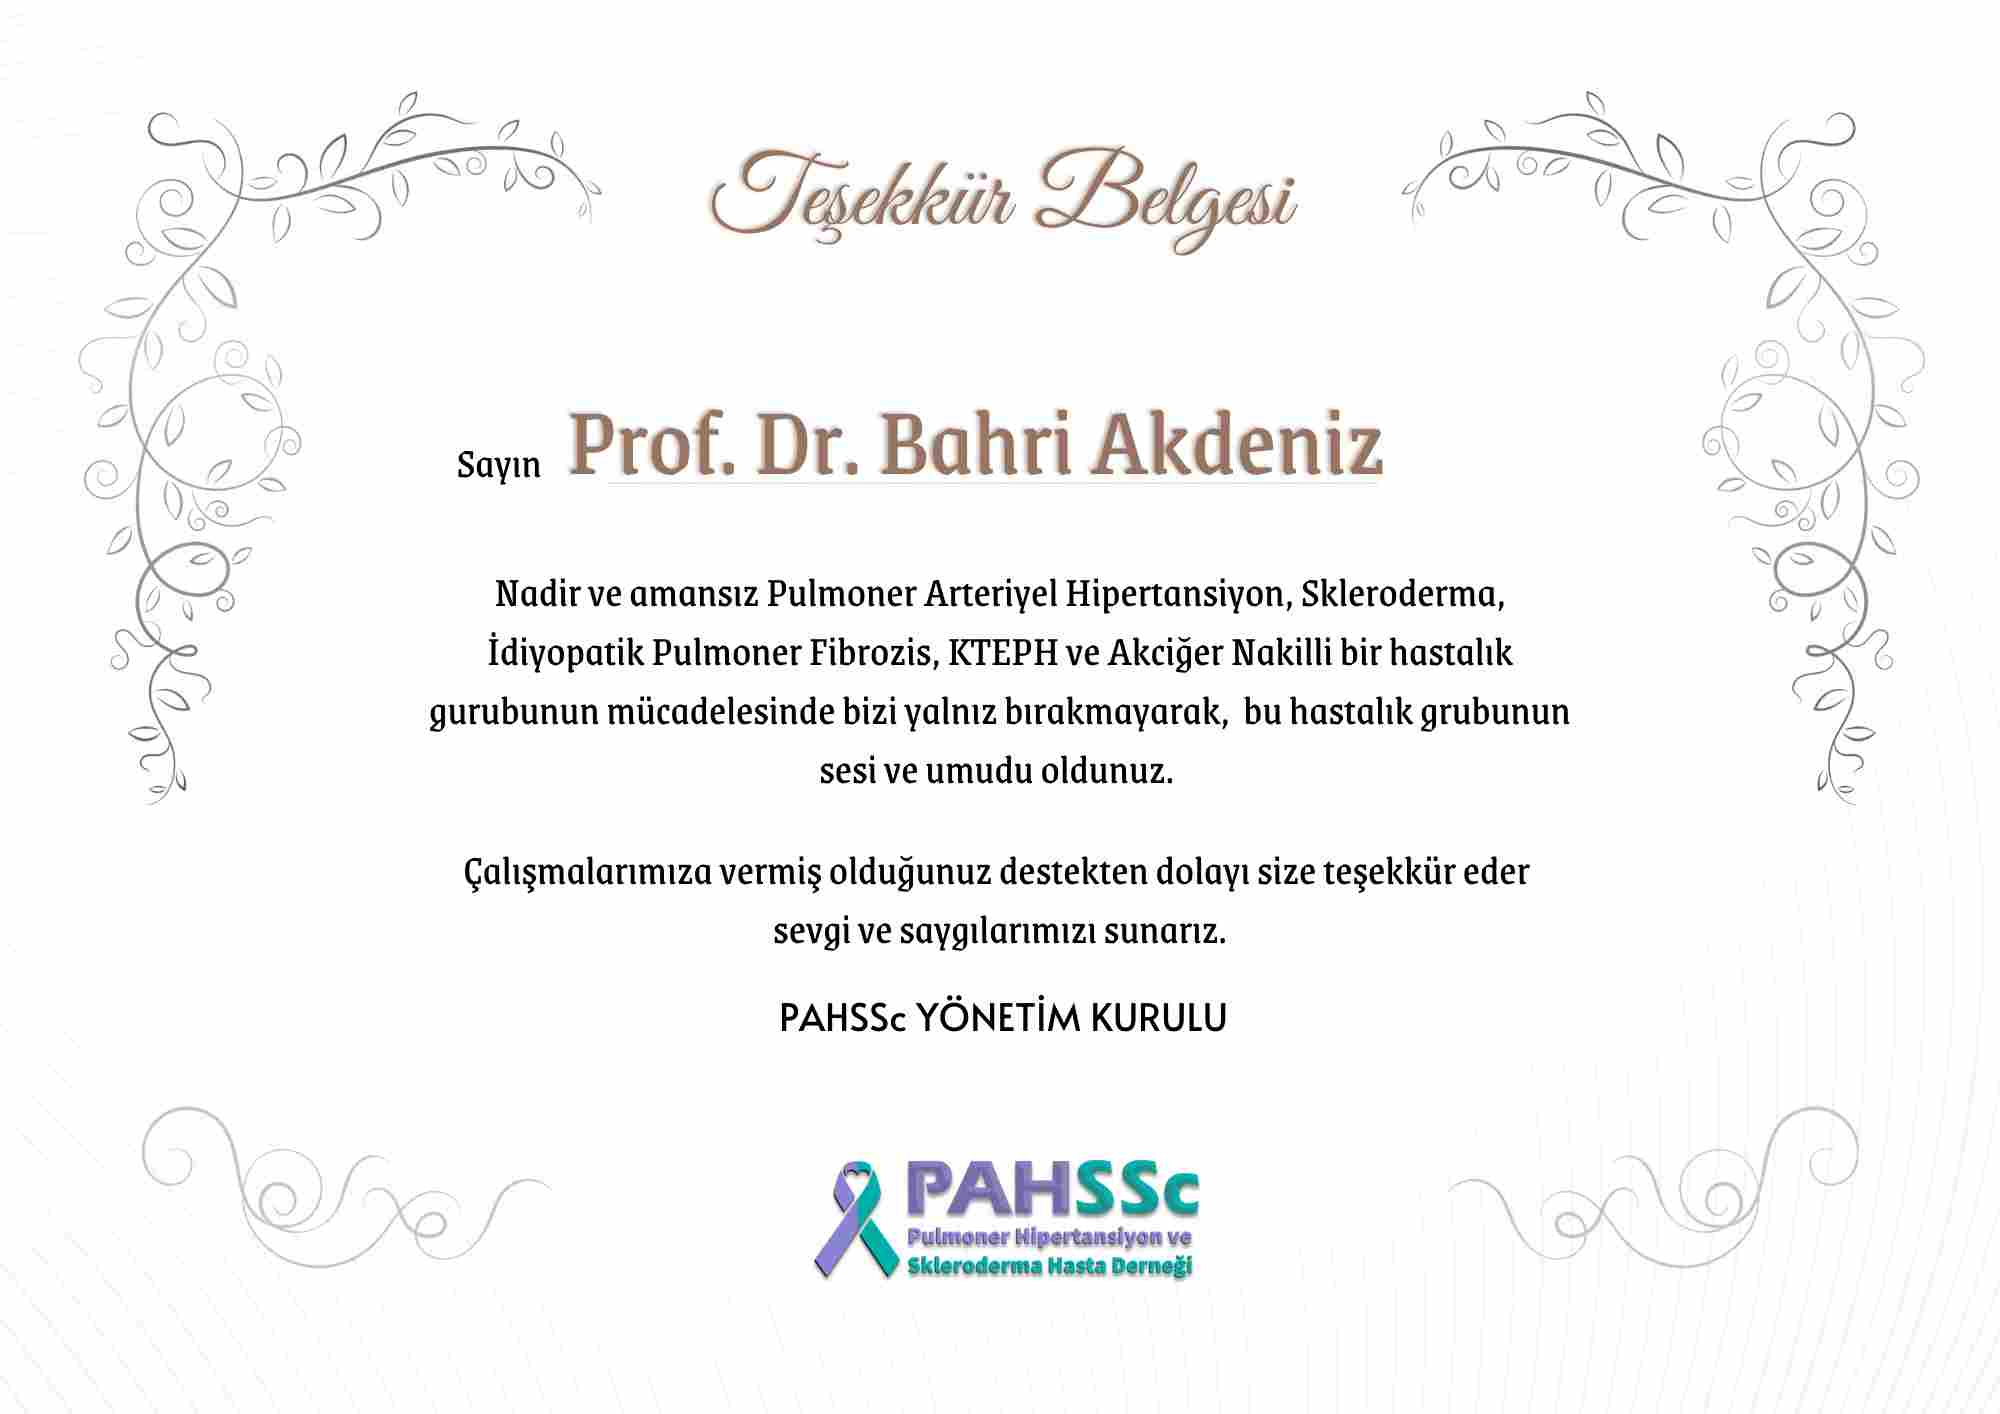  Prof. Dr. Bahri Akdeniz